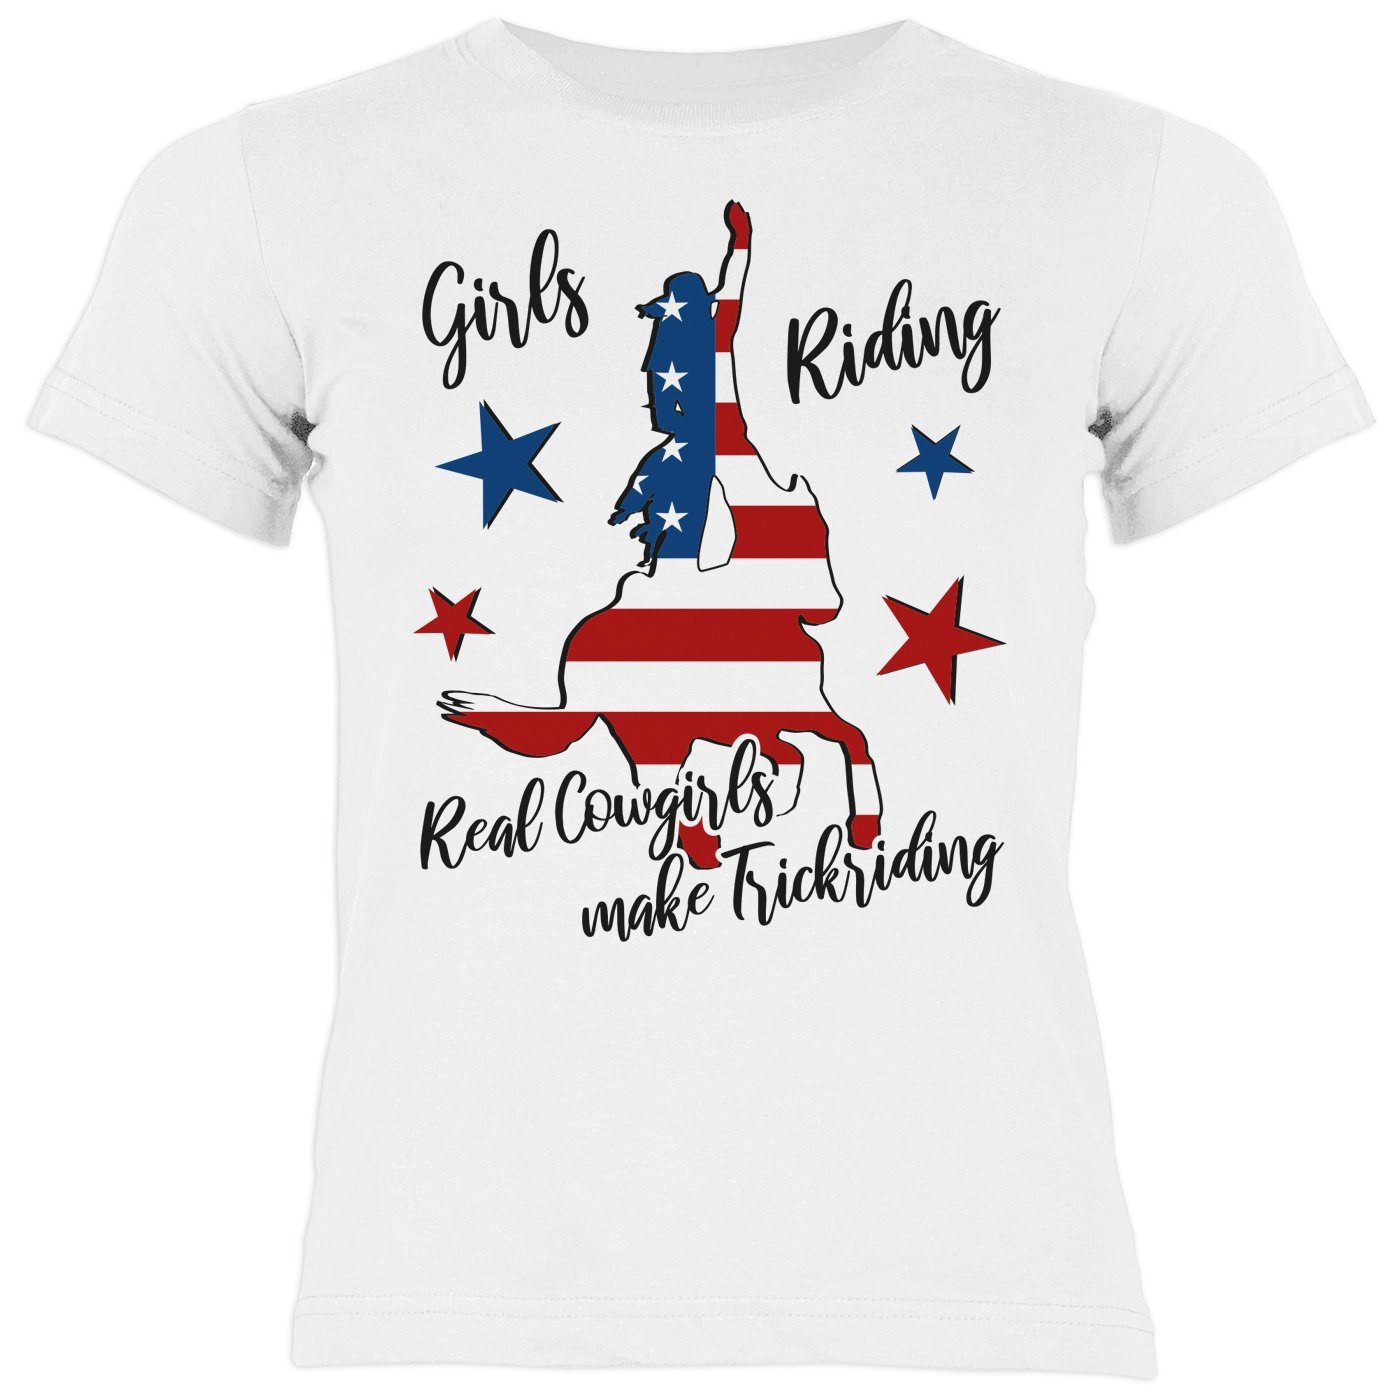 : Real Shirts Trickreiter Cowgirls Motiv Trickreiter Trickriding make Cowgirl - Kinder Trickriding T-Shirt Riding Shirt Tini T-Shirt Girls Kindershirt